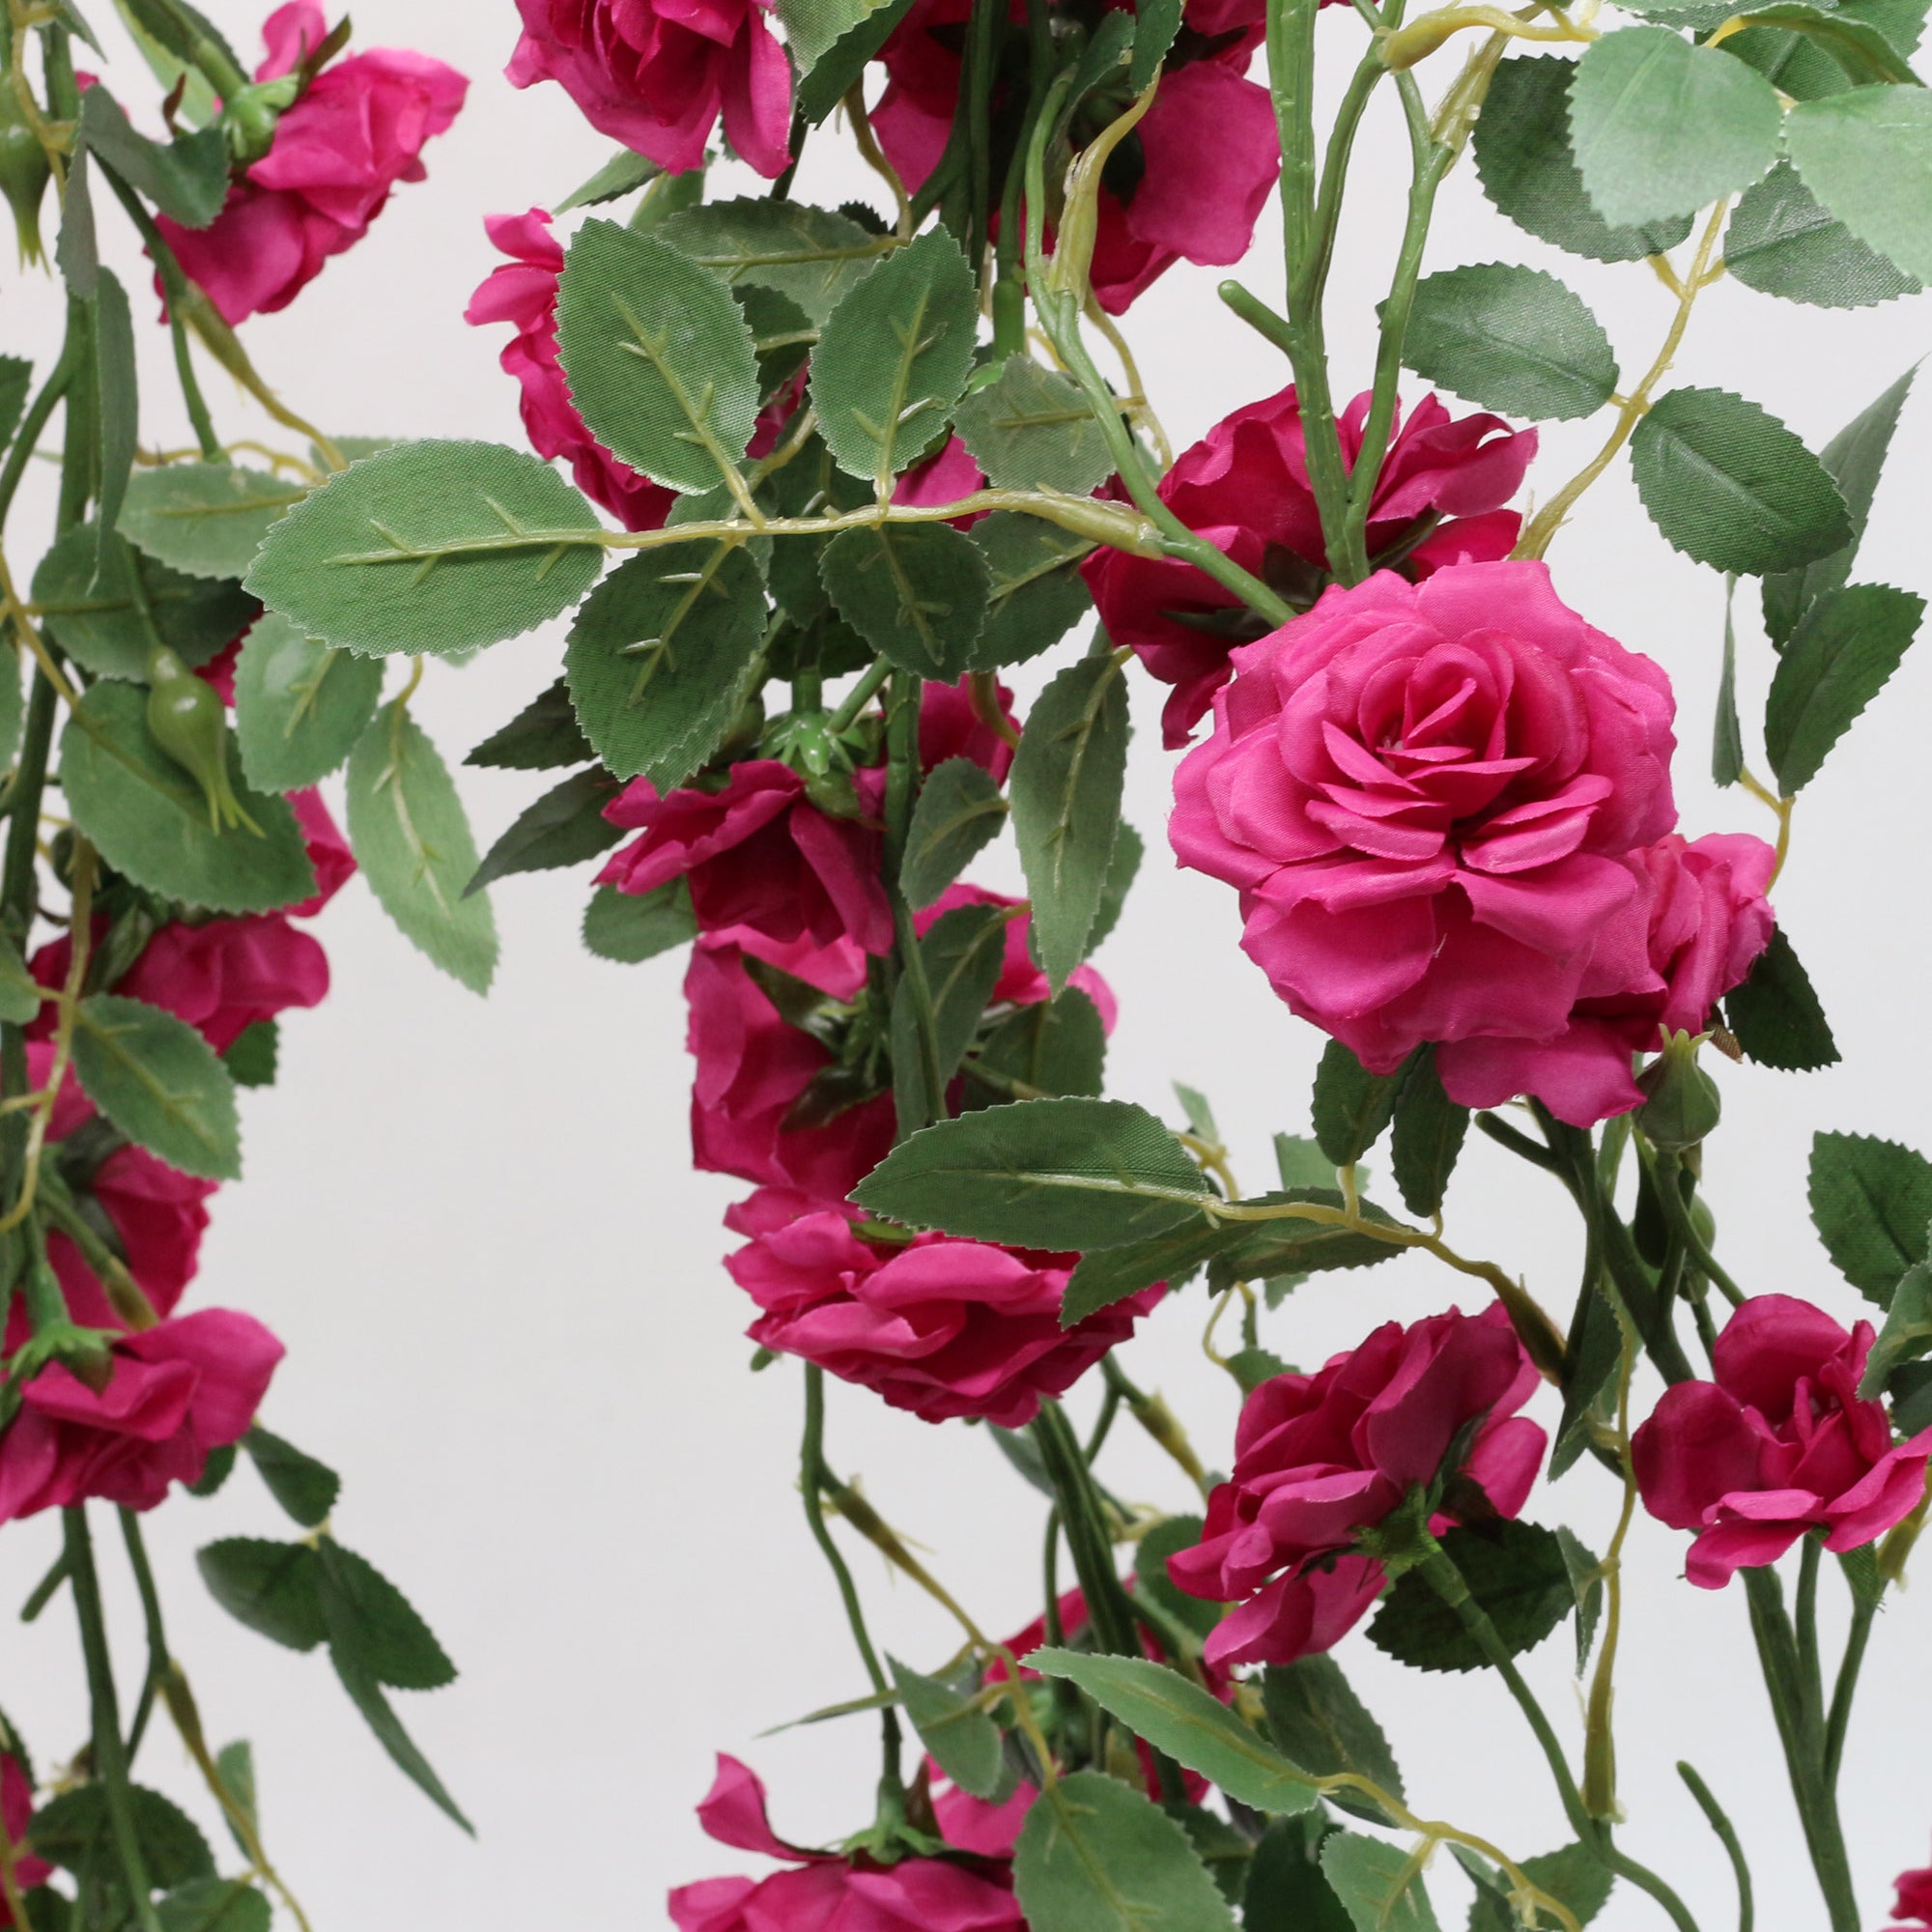 Wedding Arch Flower Vines Artificial Rose Garlands Outdoor Decor